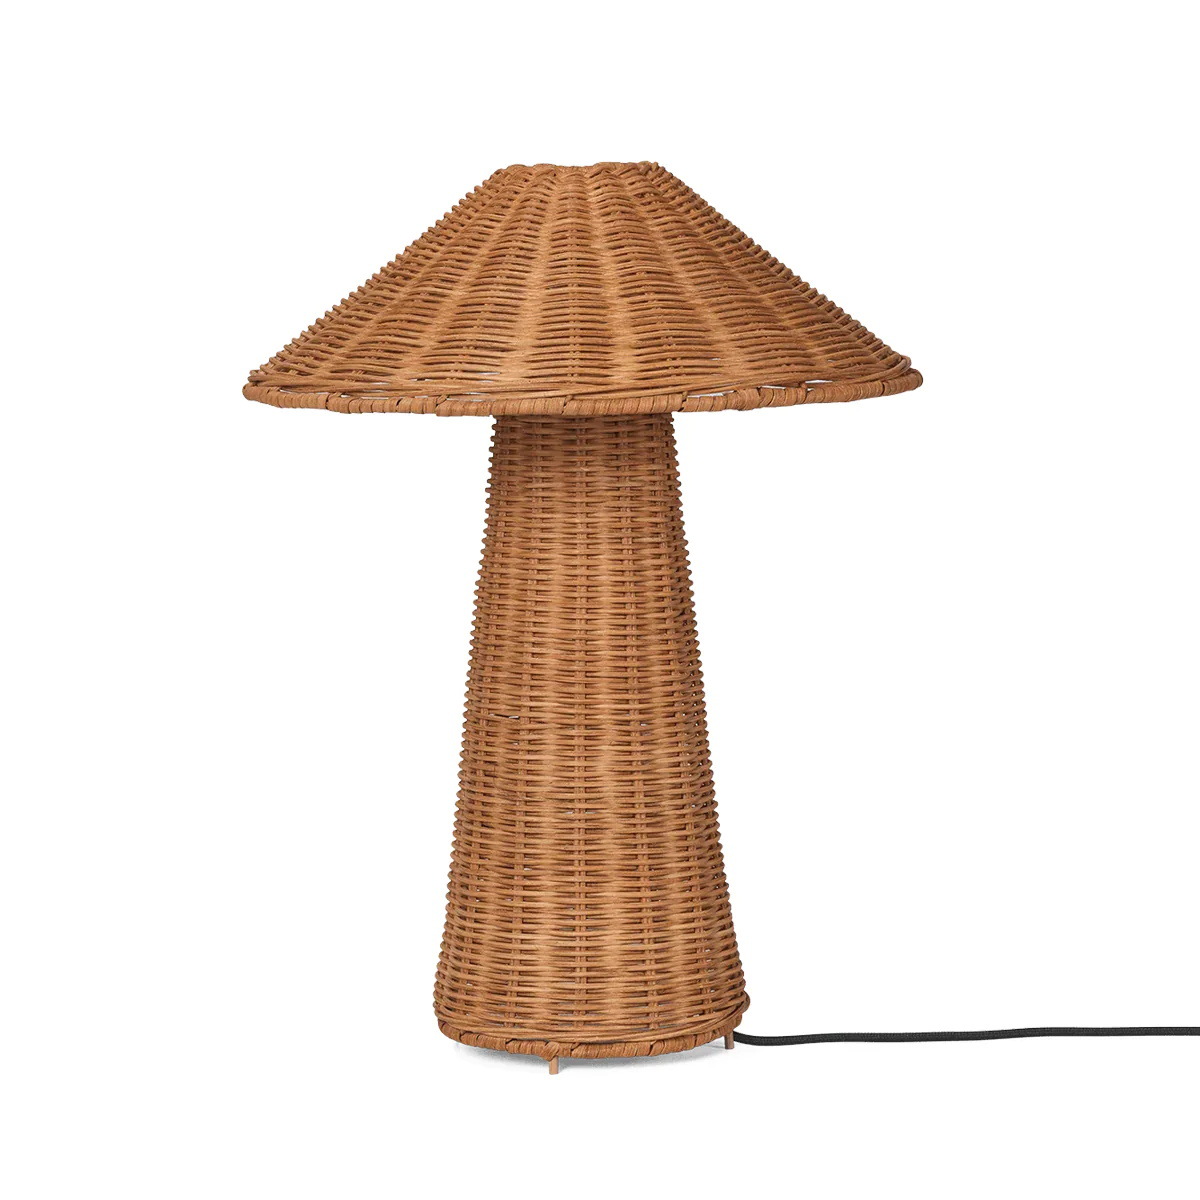 Nordic retro rattan handmade mushroom table lamp